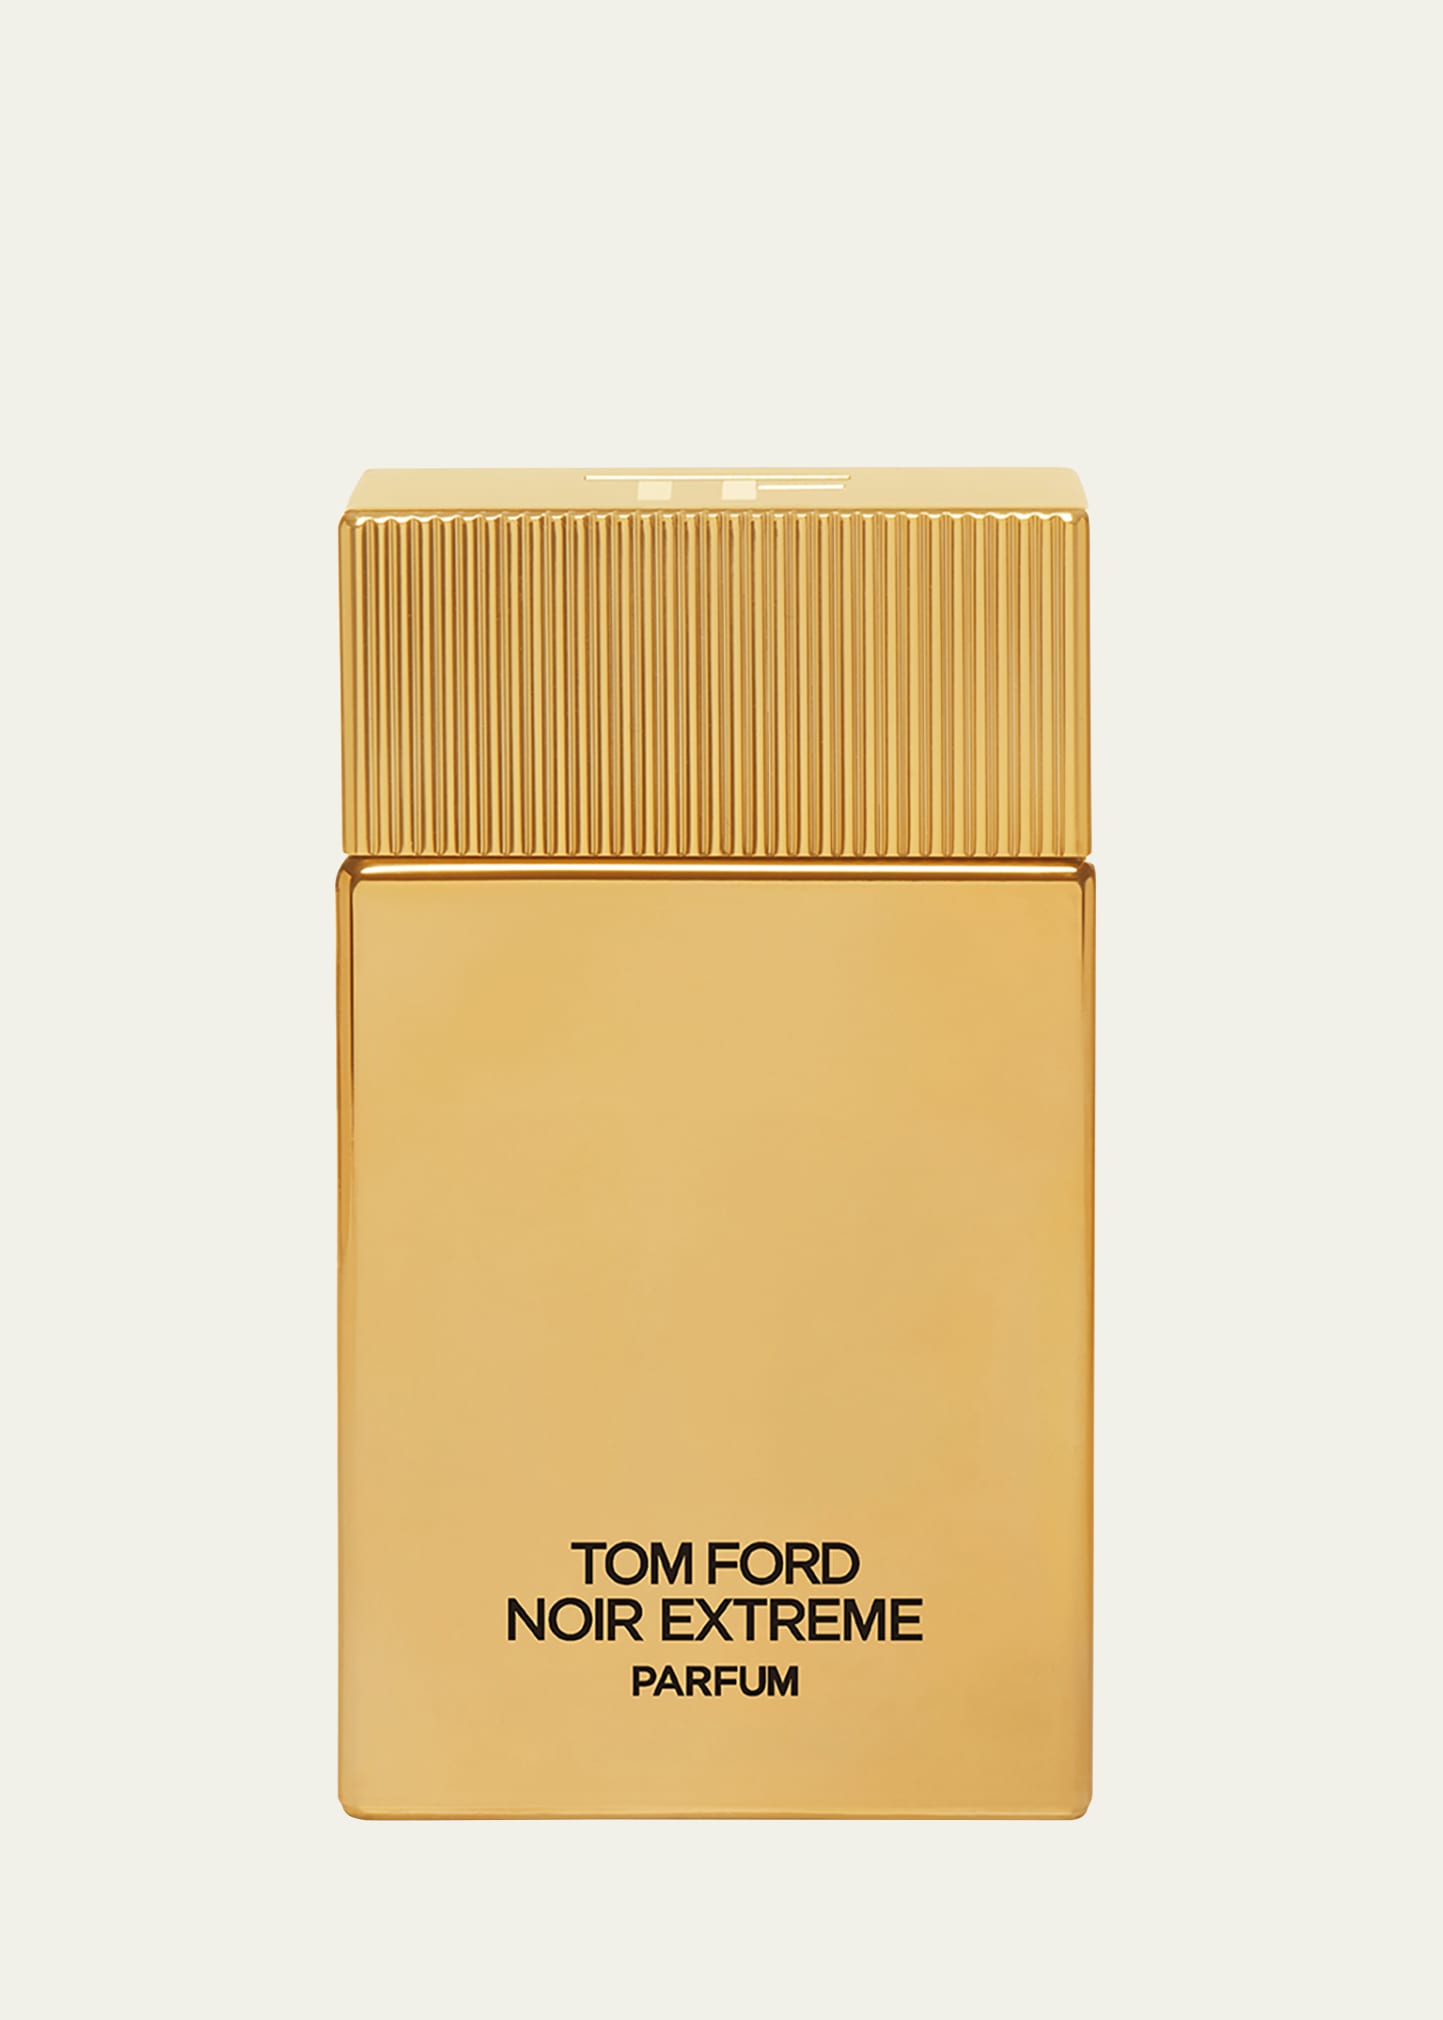 TOM FORD Noir Extreme Parfum, 3.4 oz.